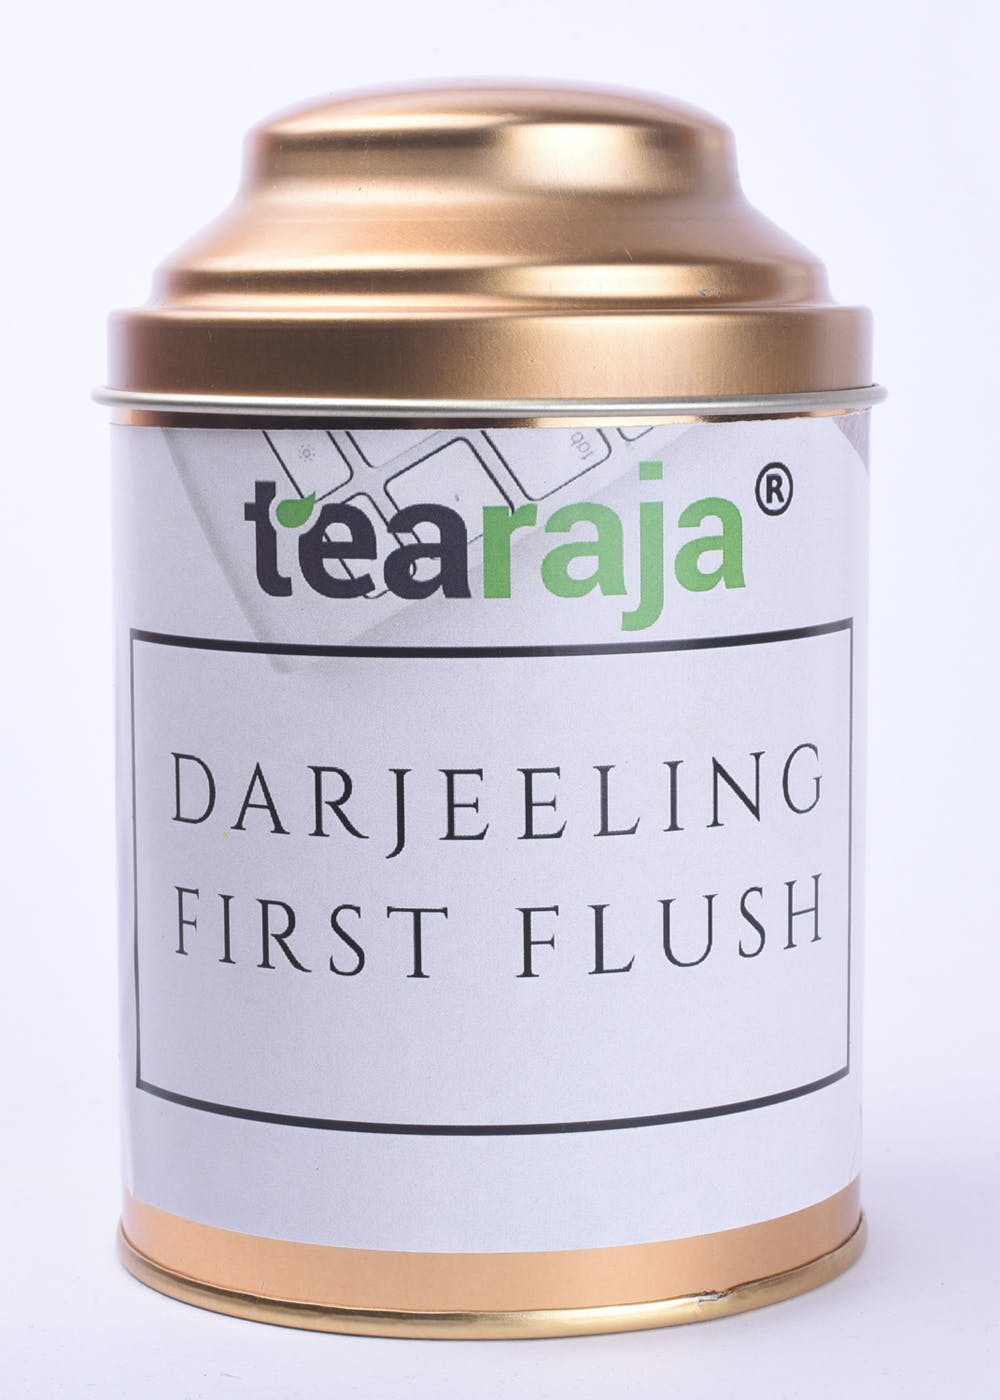 First Flush Darjeeling Tea